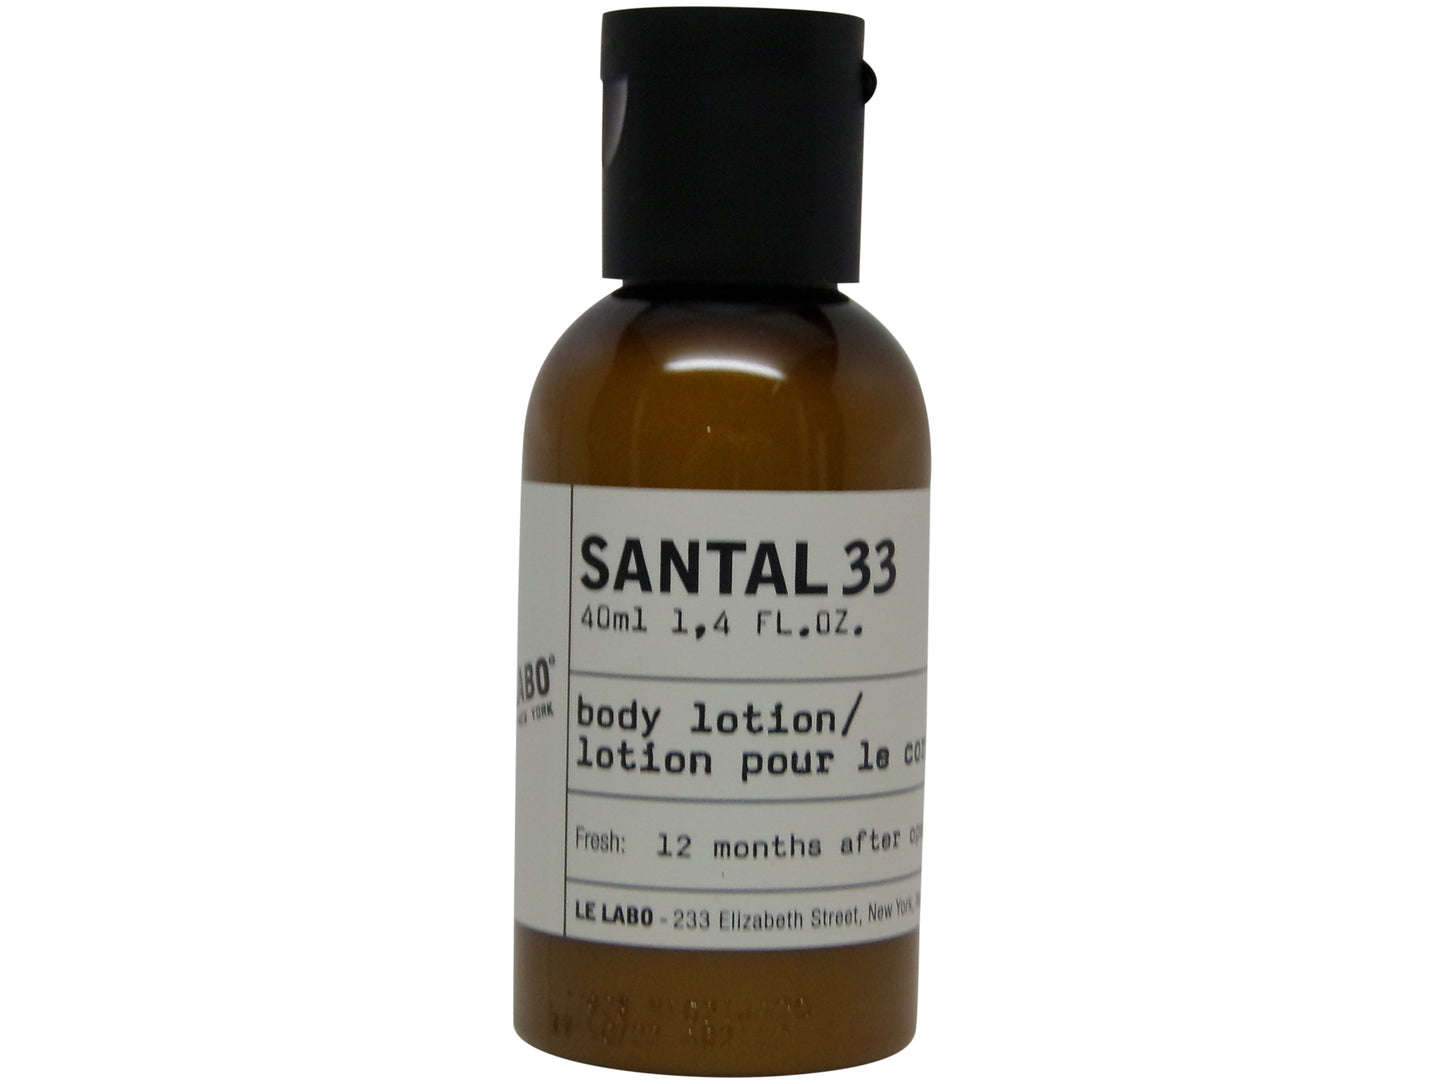 Le Labo Santal 33 Body Lotion 1.4oz bottle.